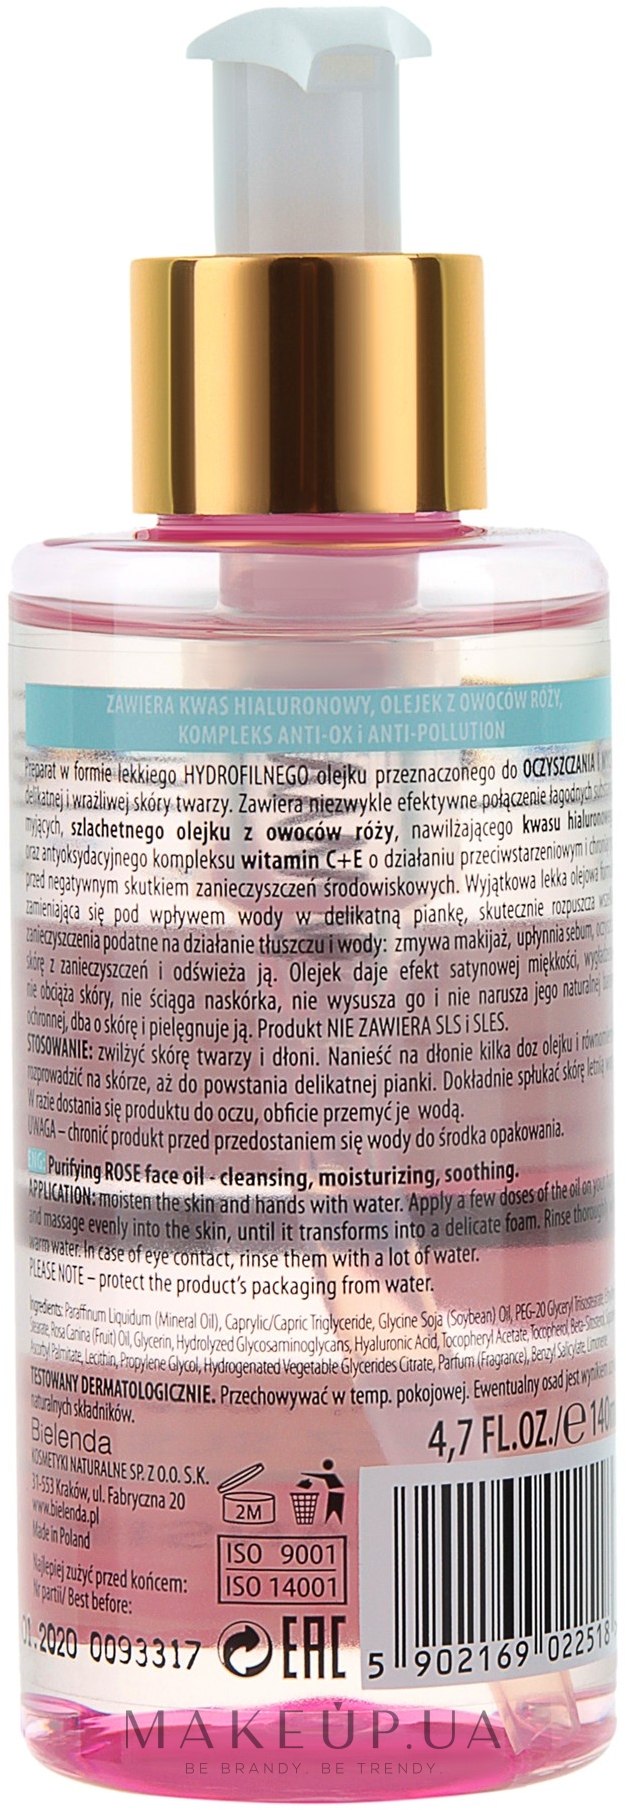 Bielenda Rose Care Cleansing Face Oil For Sensitive Skin